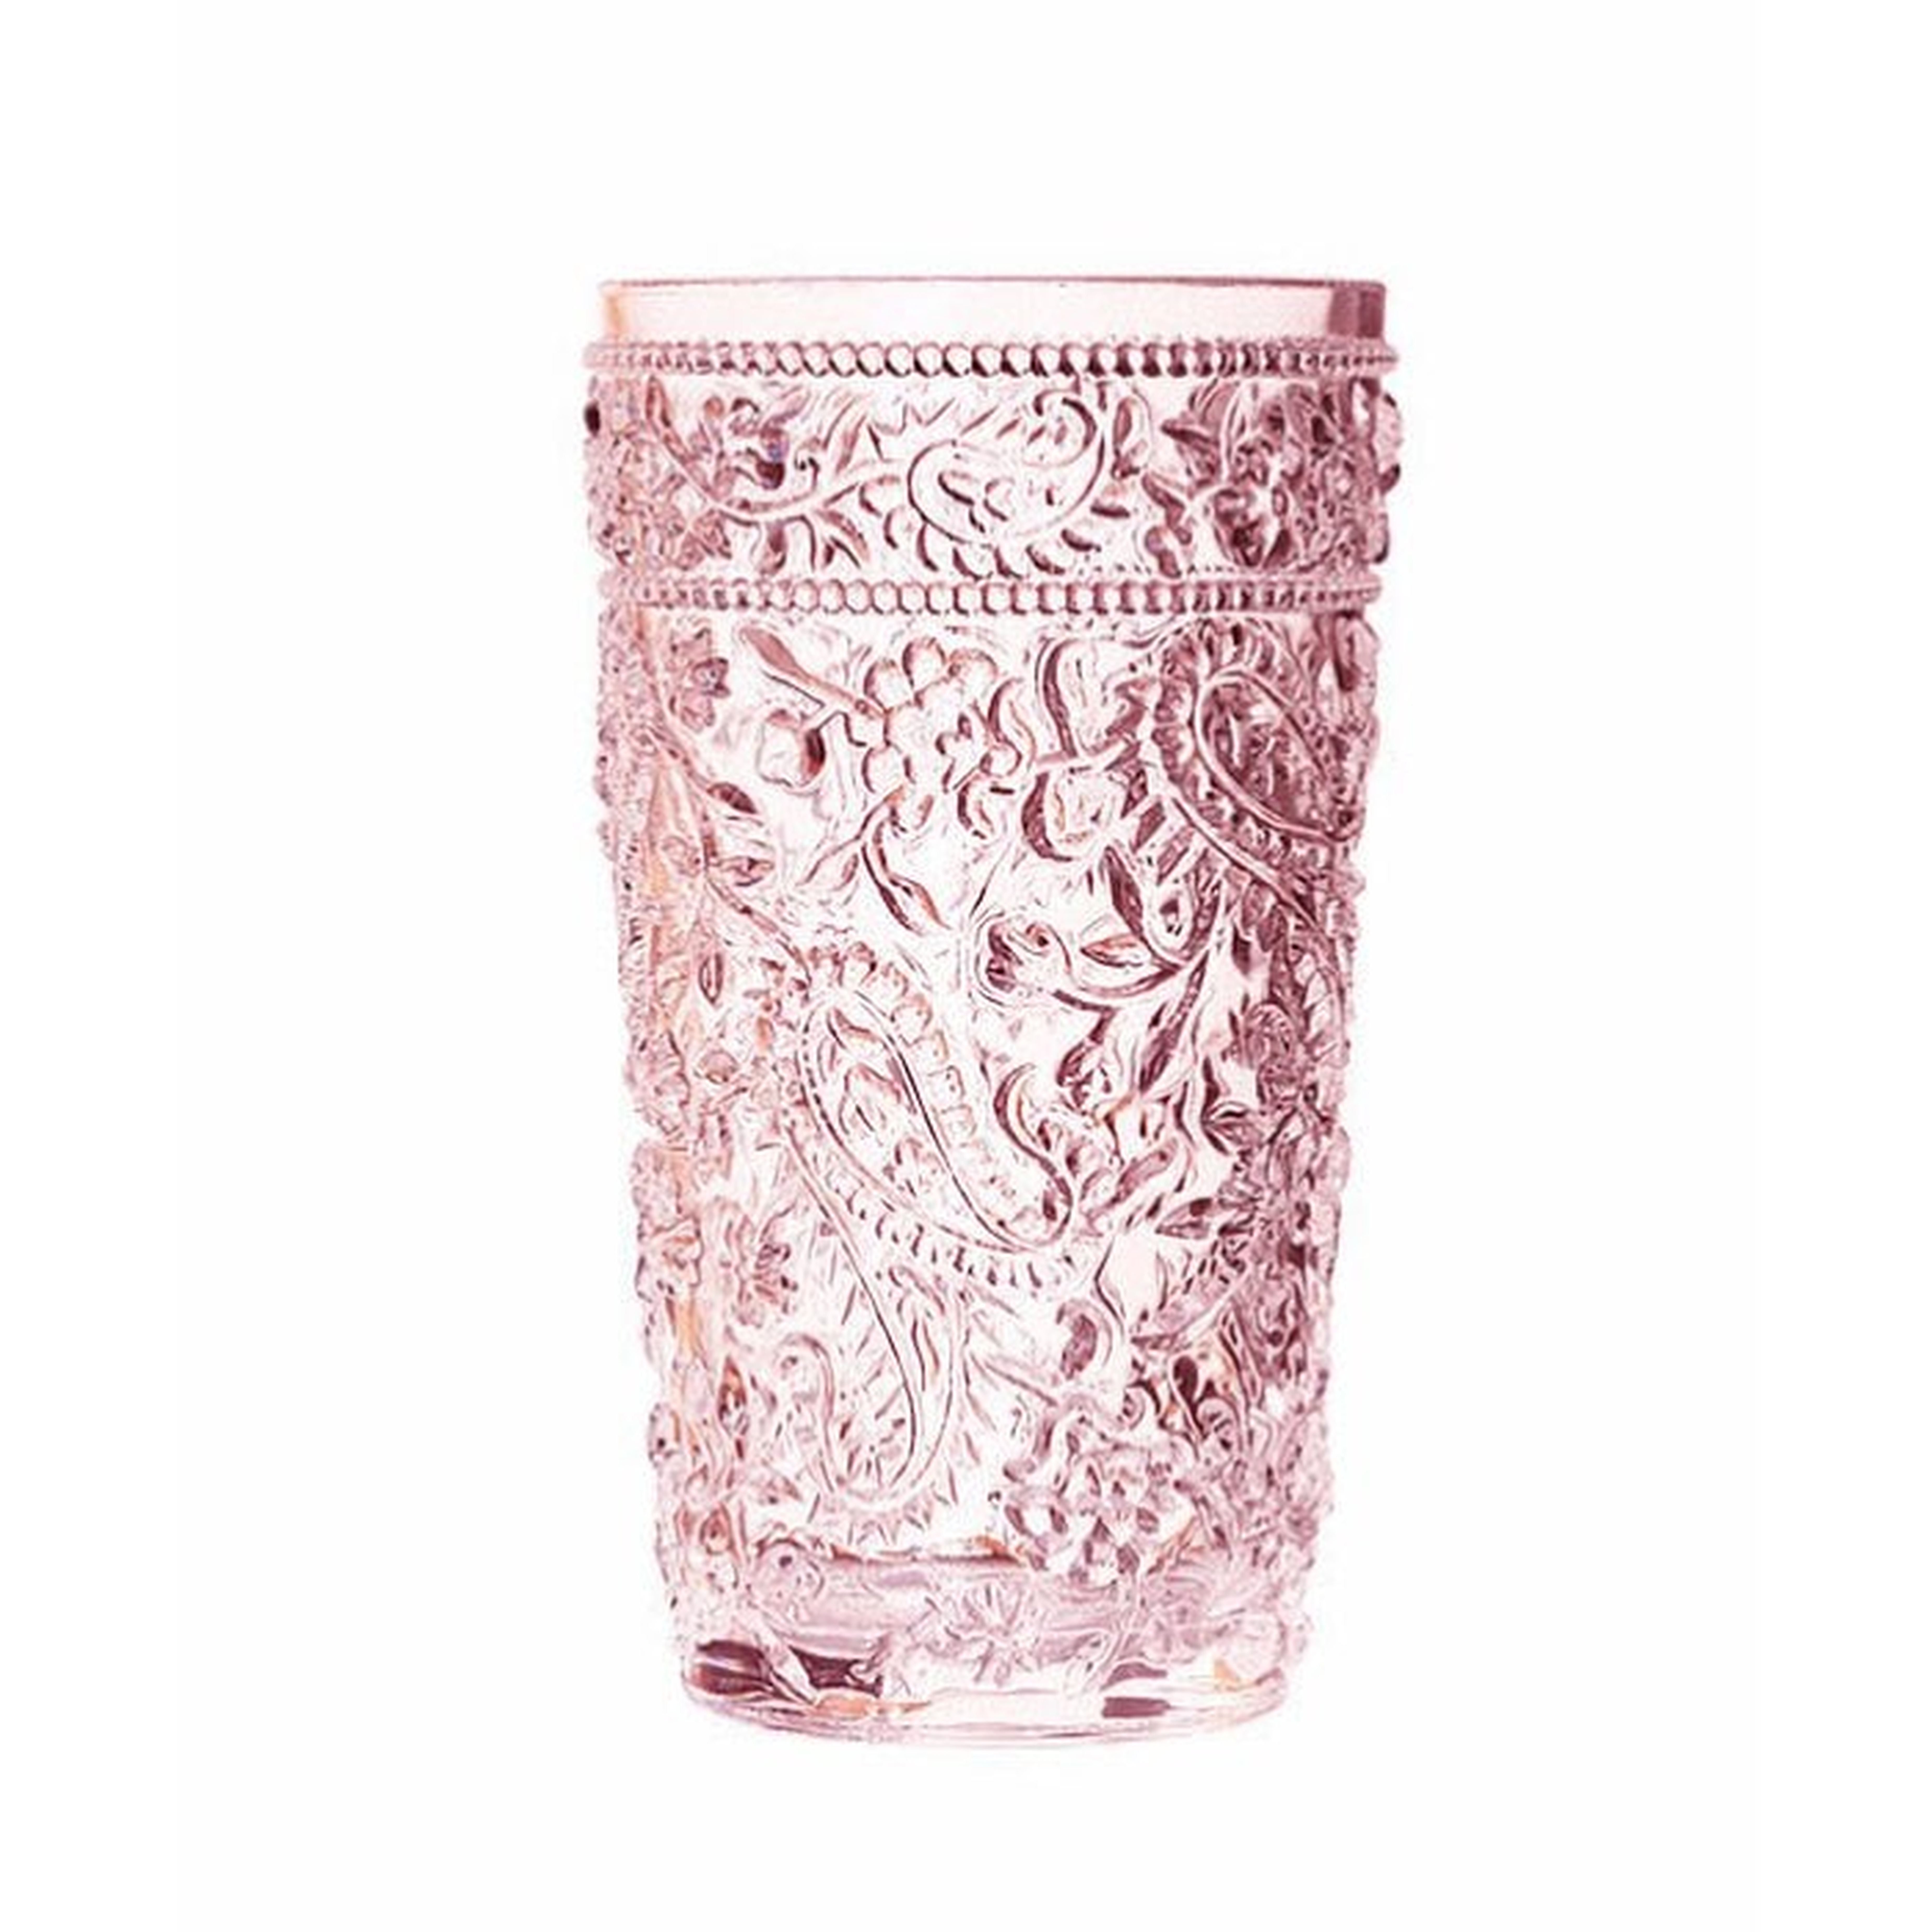 Calder Paisley 17 oz. Acrylic Drinking Glass- set of 4 - Wayfair